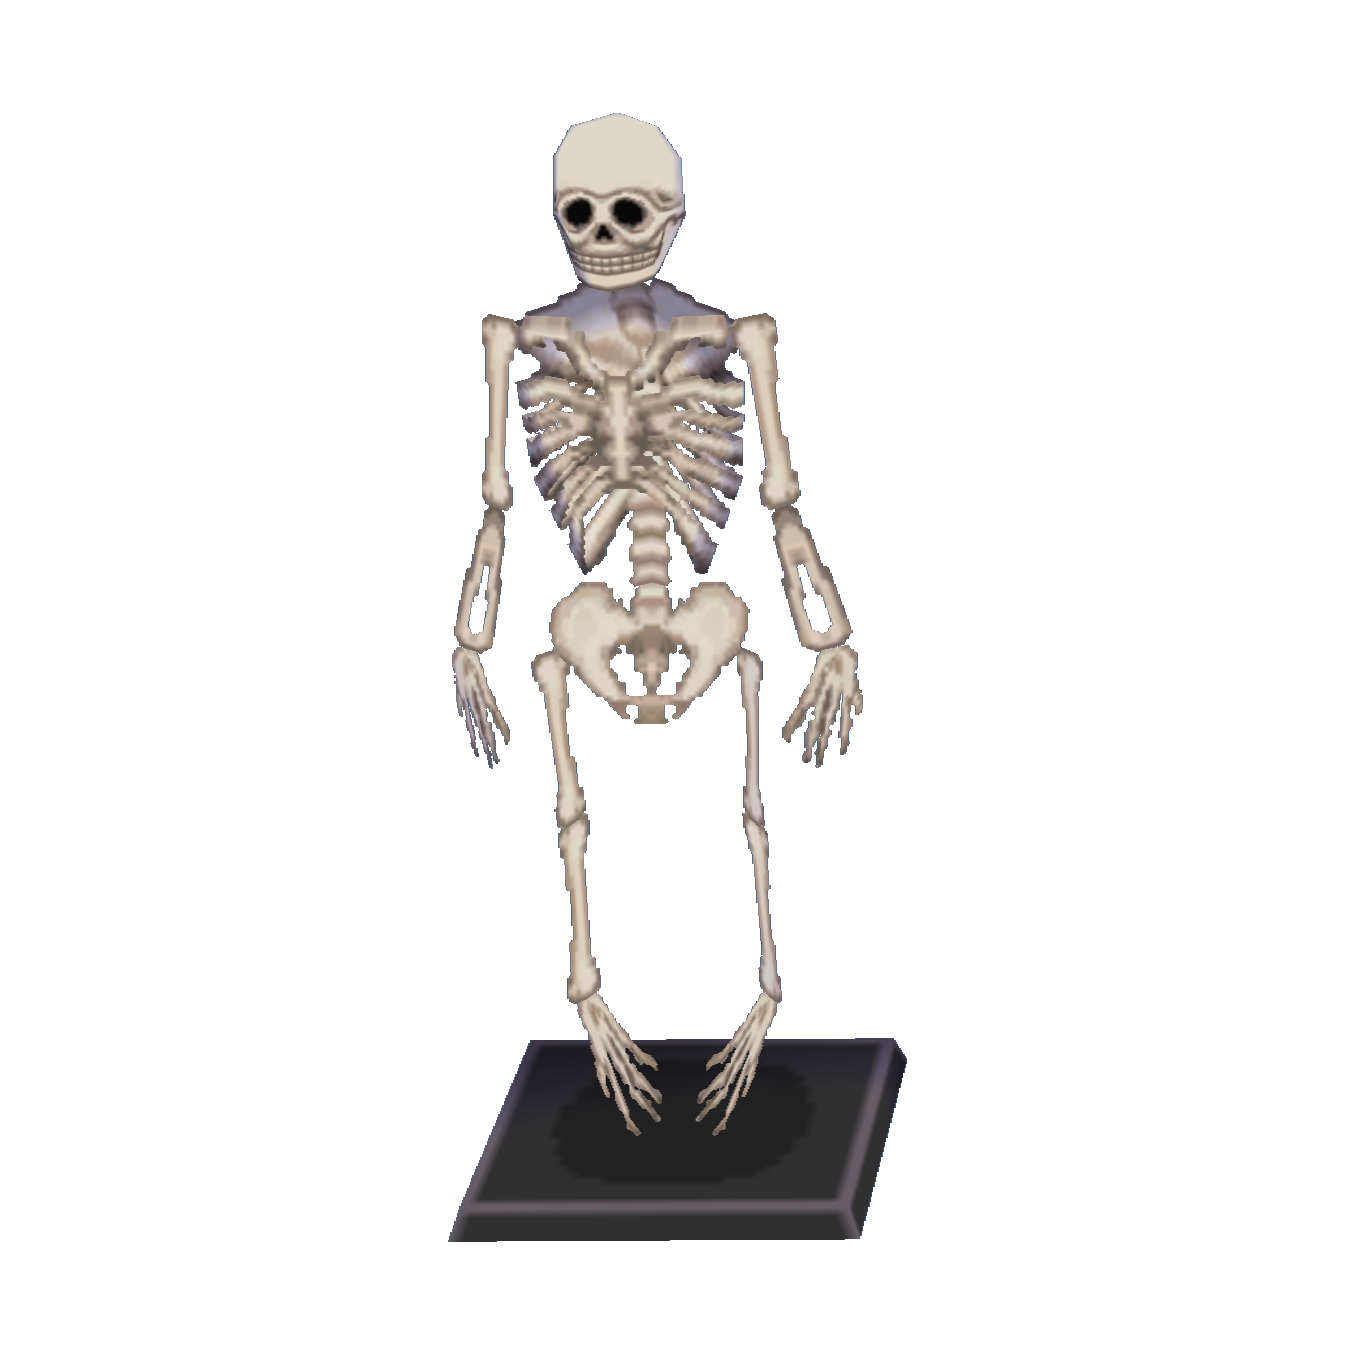 Skeleton CF Model.png